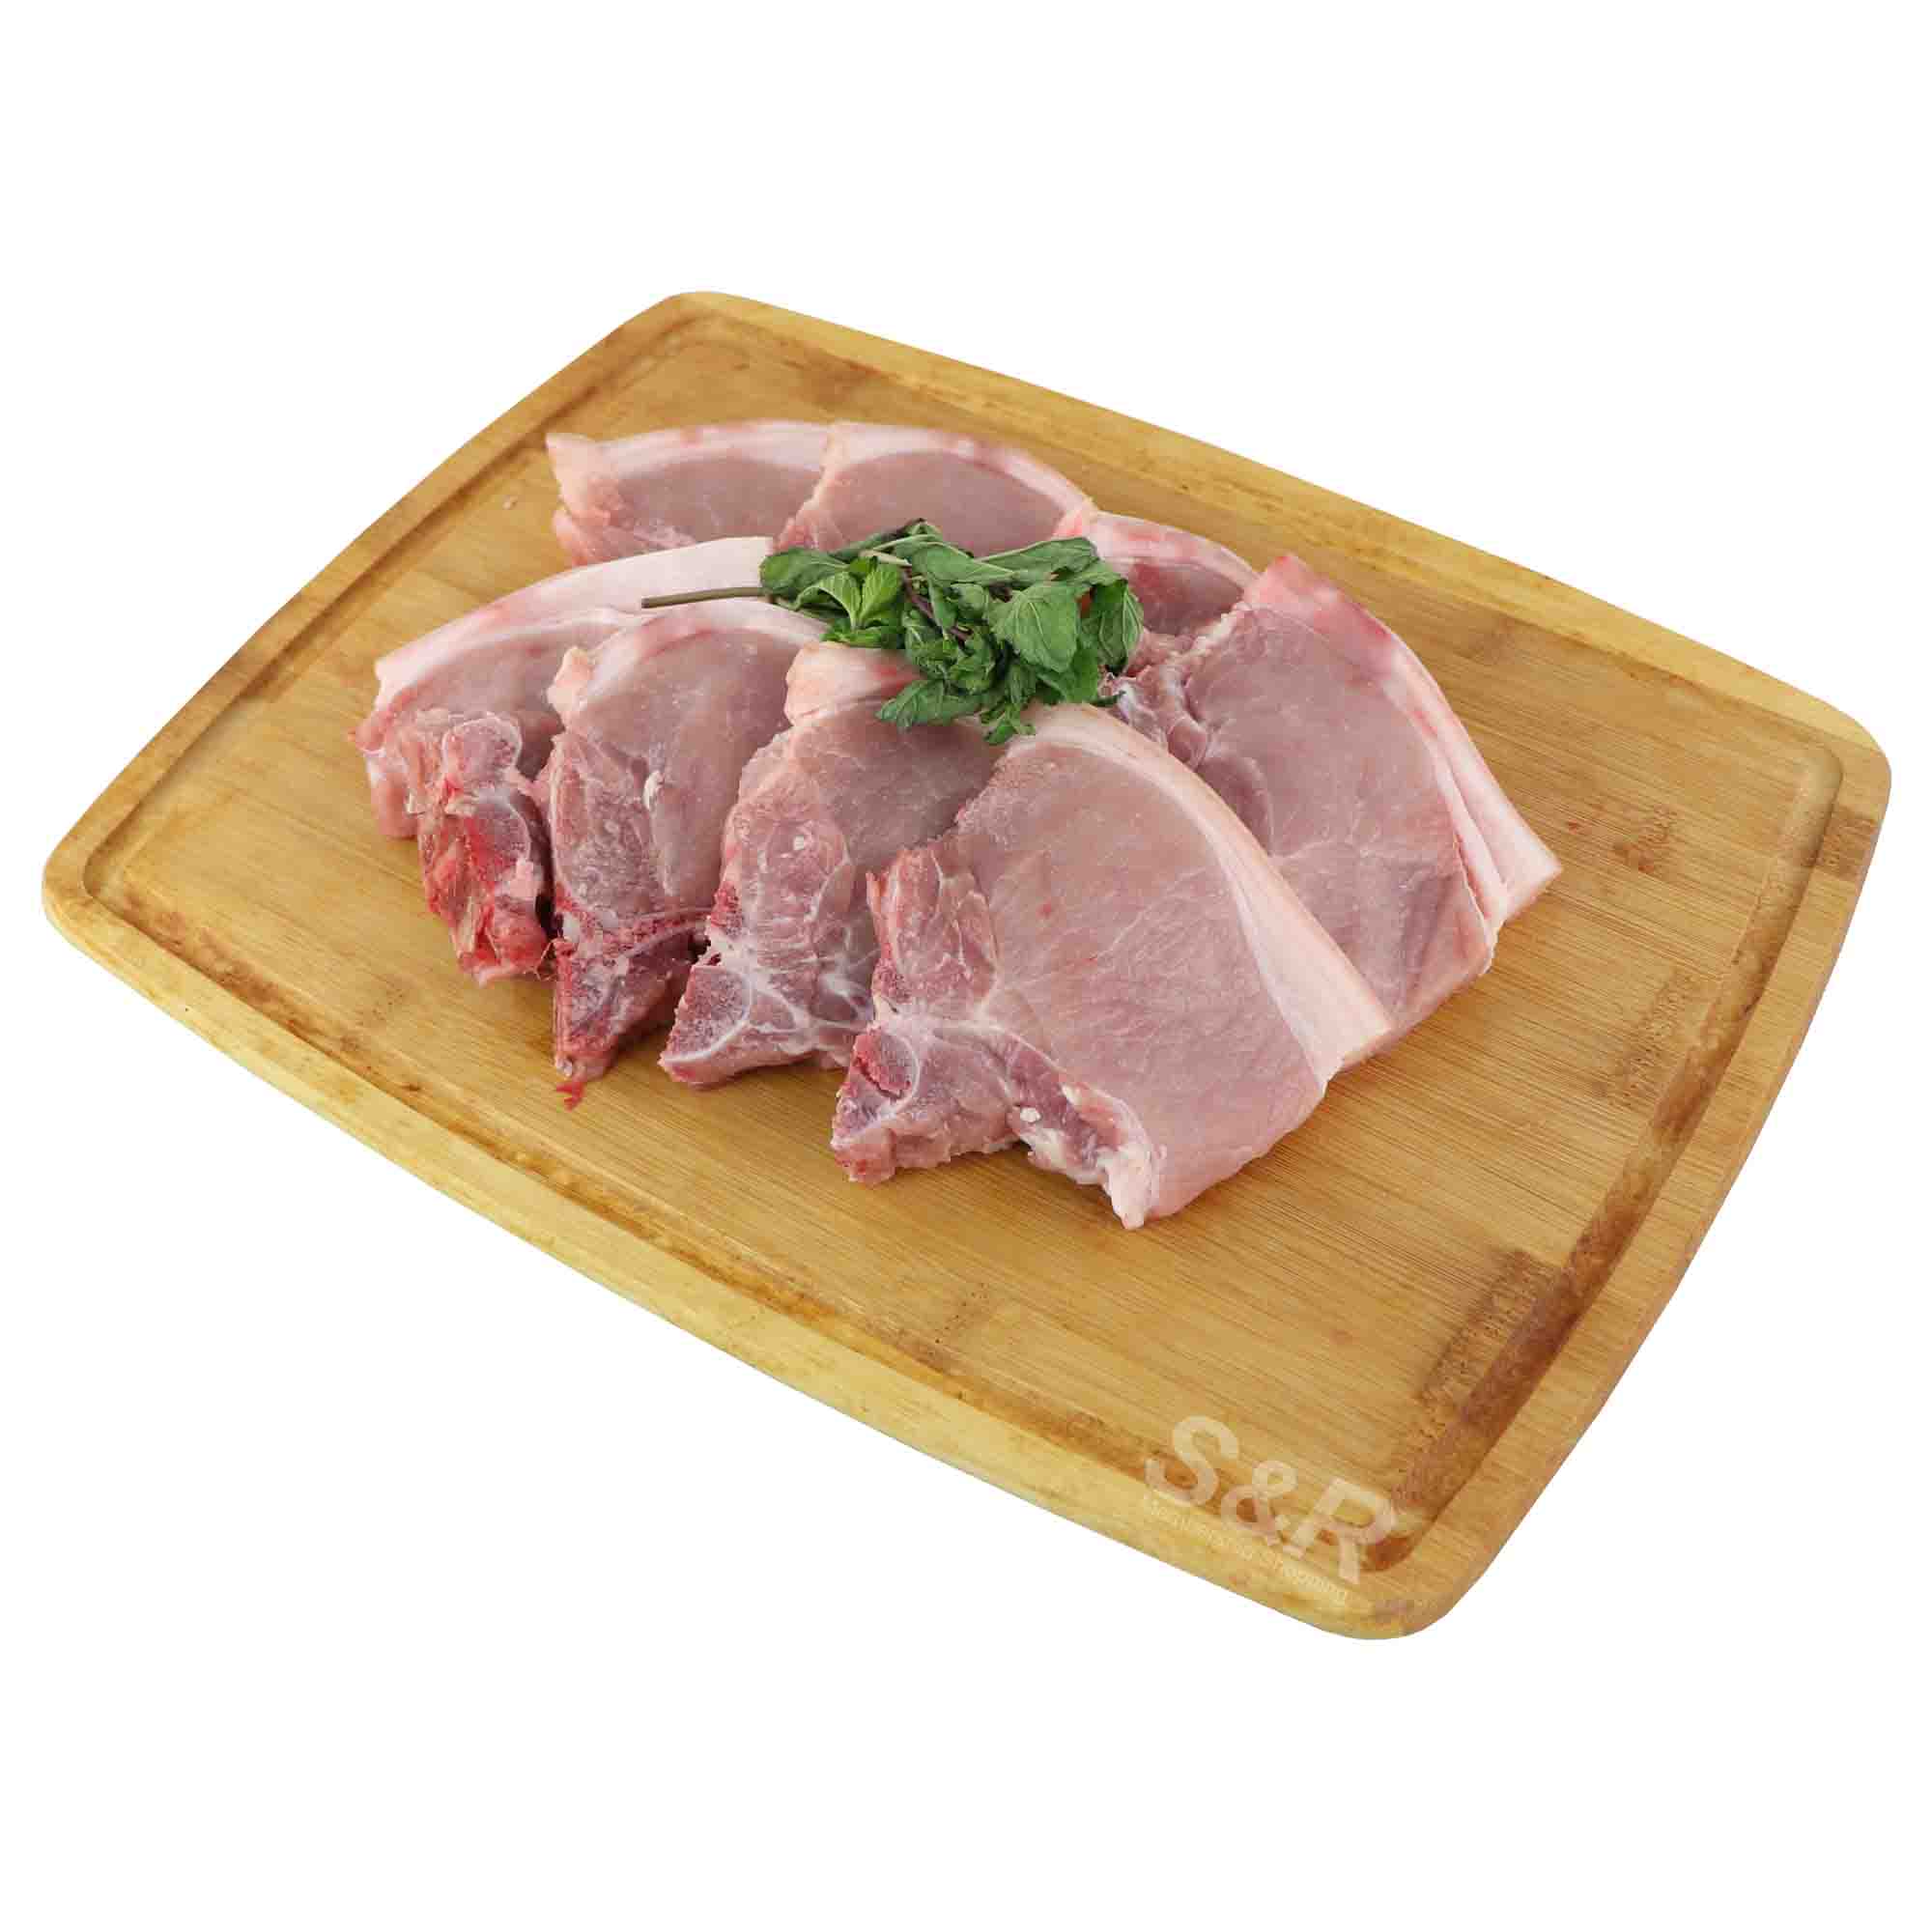 S&R Pork Chops Skin-On approx. 1.7kg